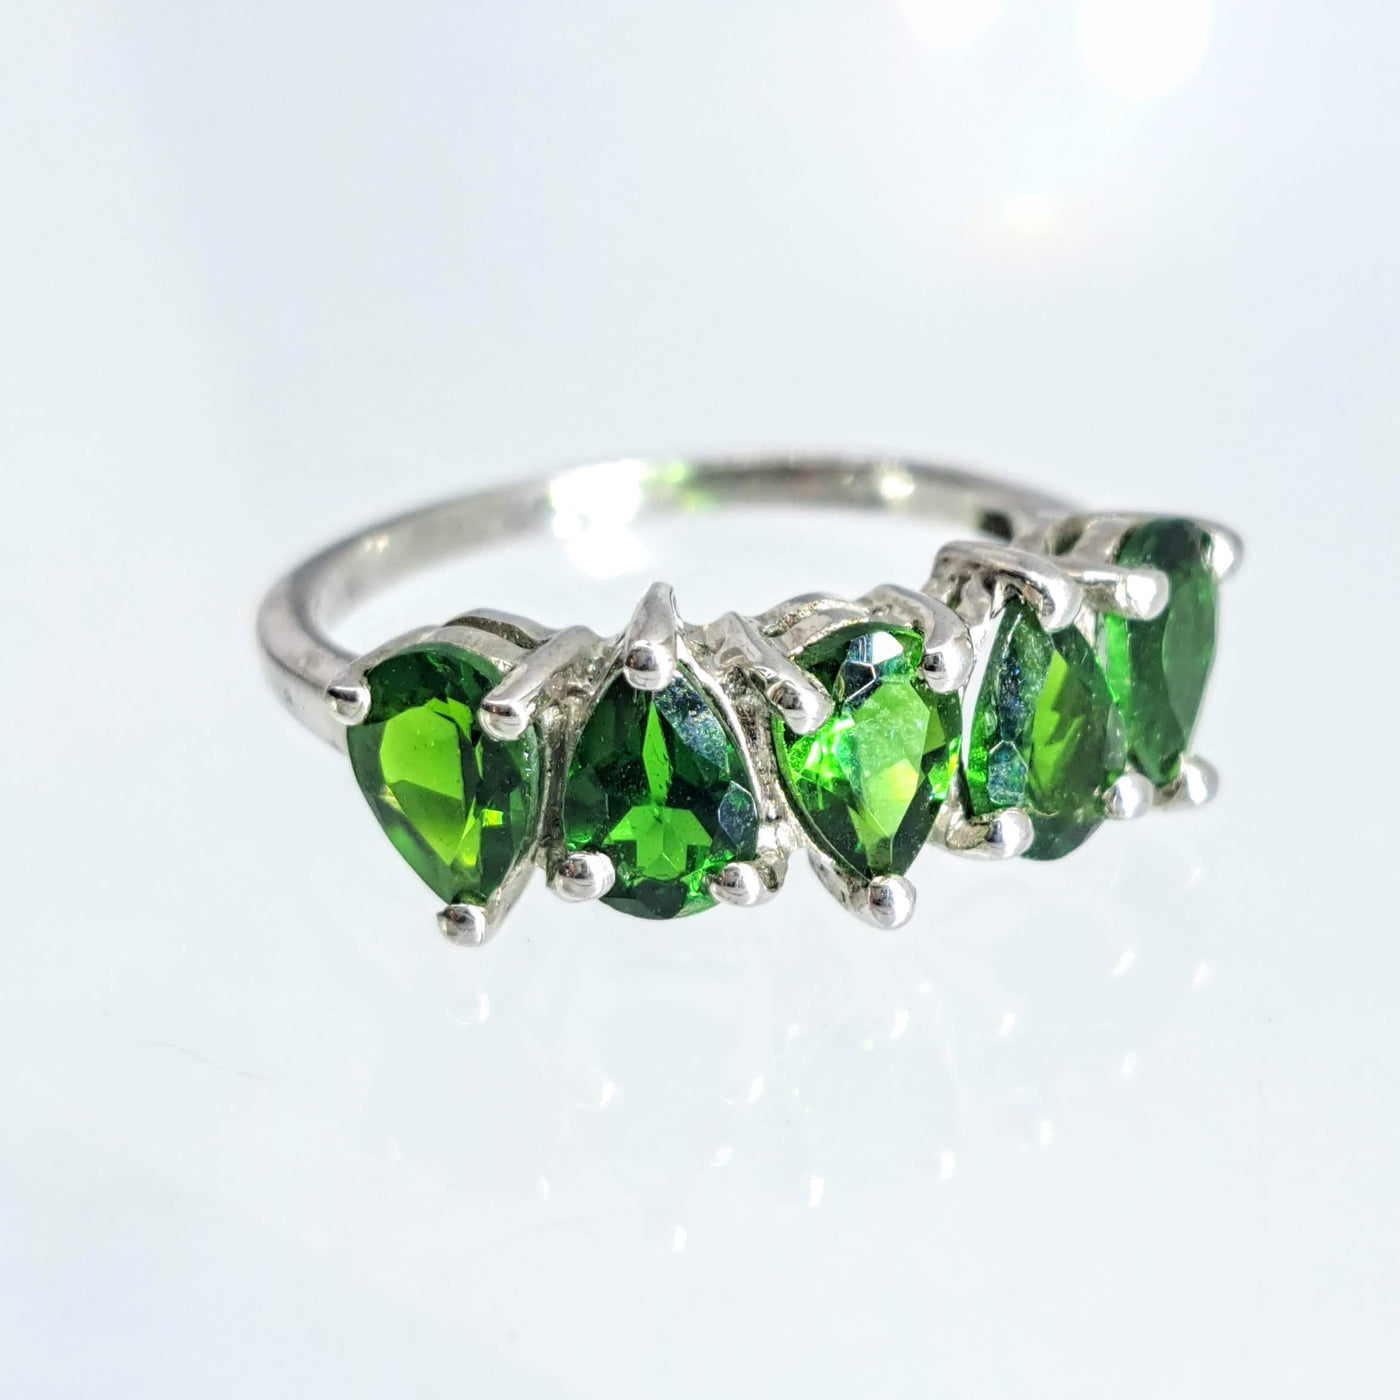 "Green Goddess" Sz 7 Ring - Chrome Diopside, Sterling